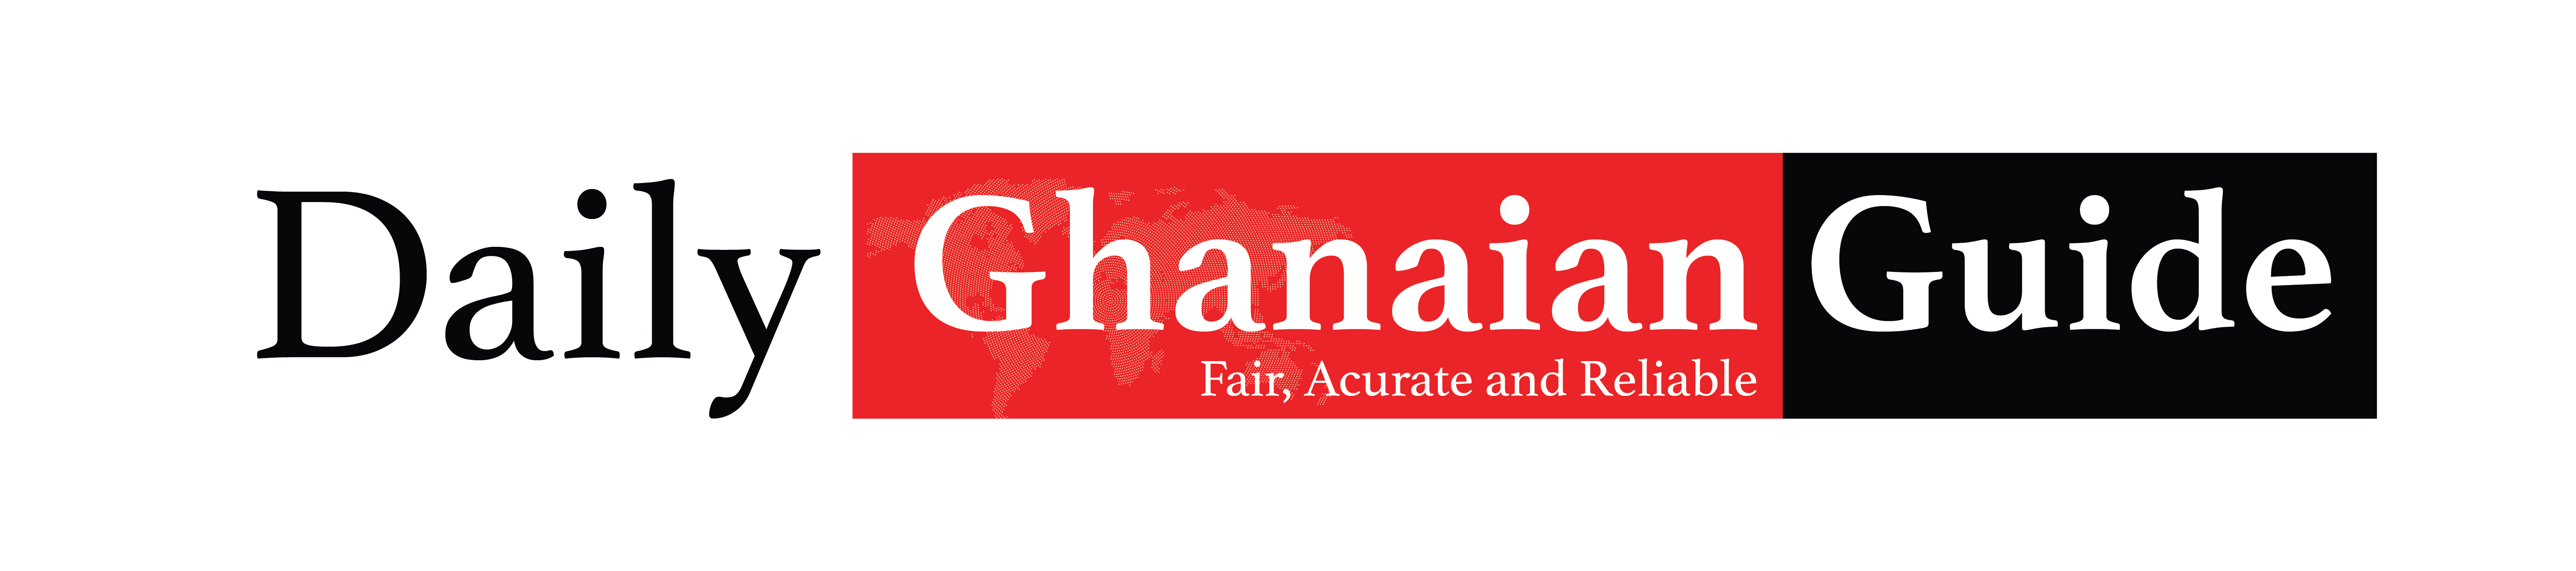 Daily Ghanaian Guide